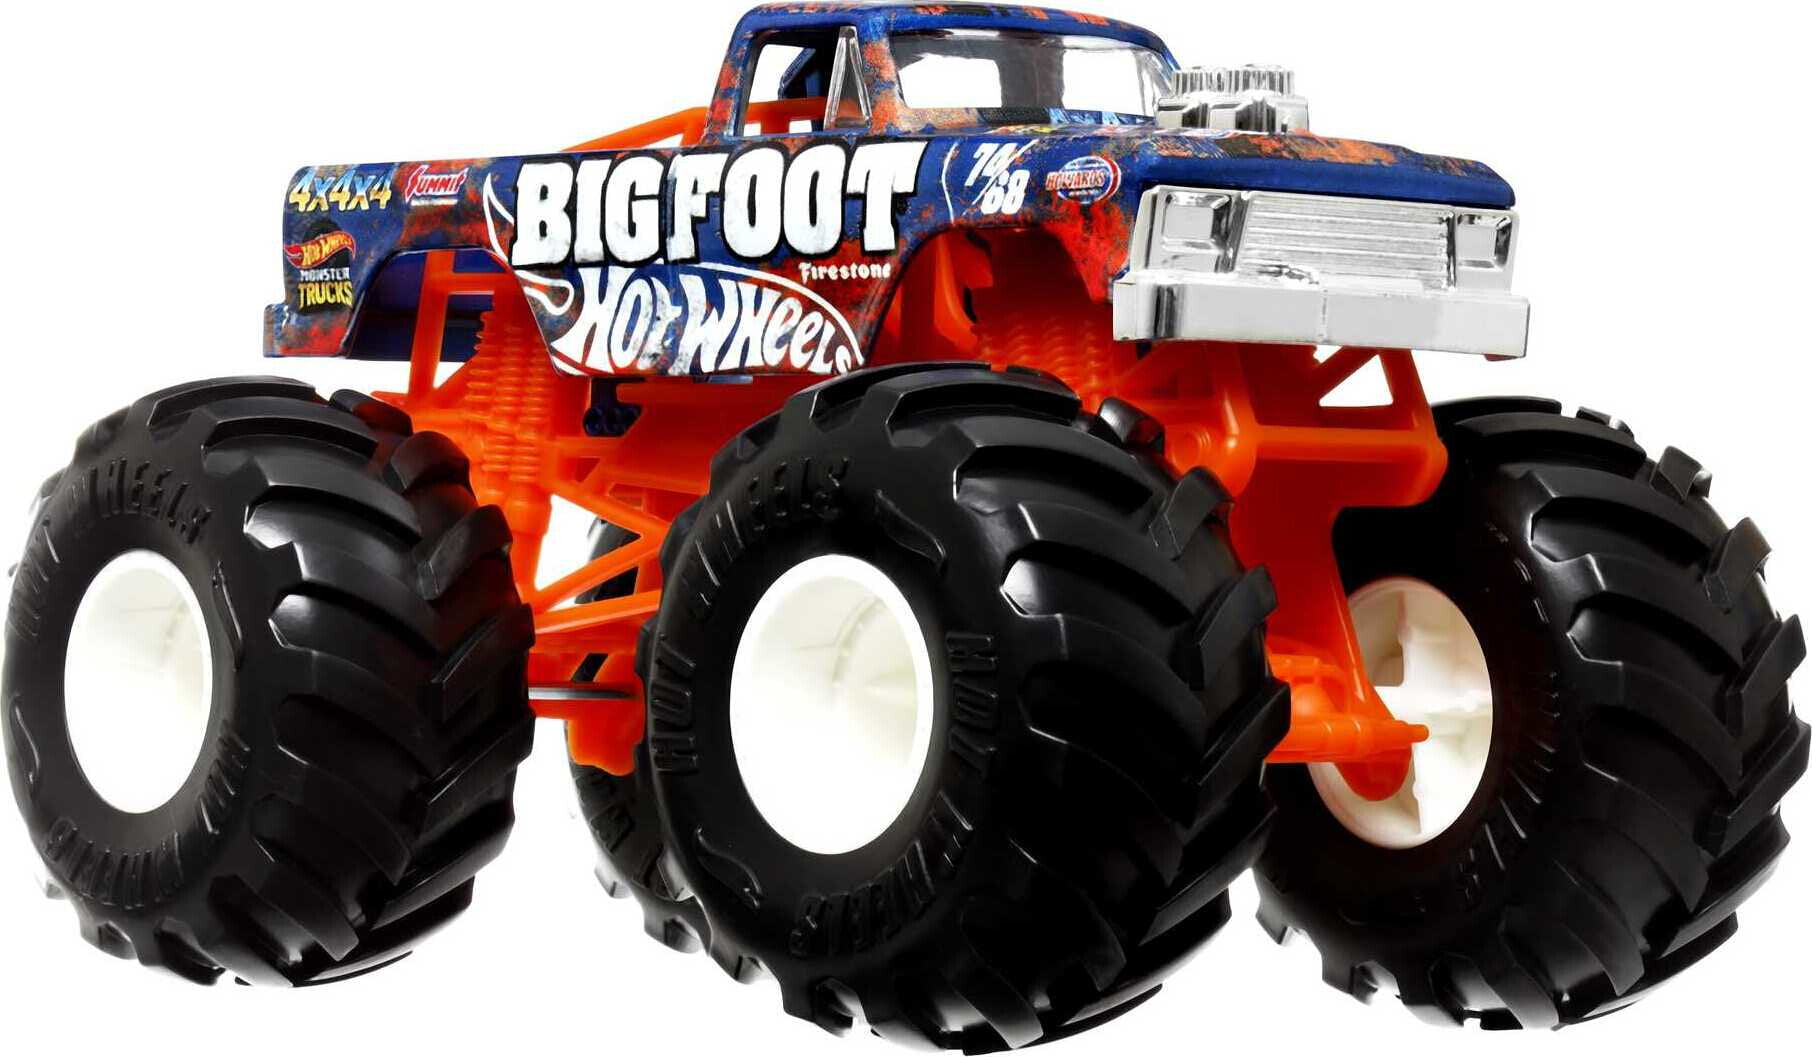 Hot Wheels Monster Trucks Oversized Bigfoot Vehicle in 1:24 Scale